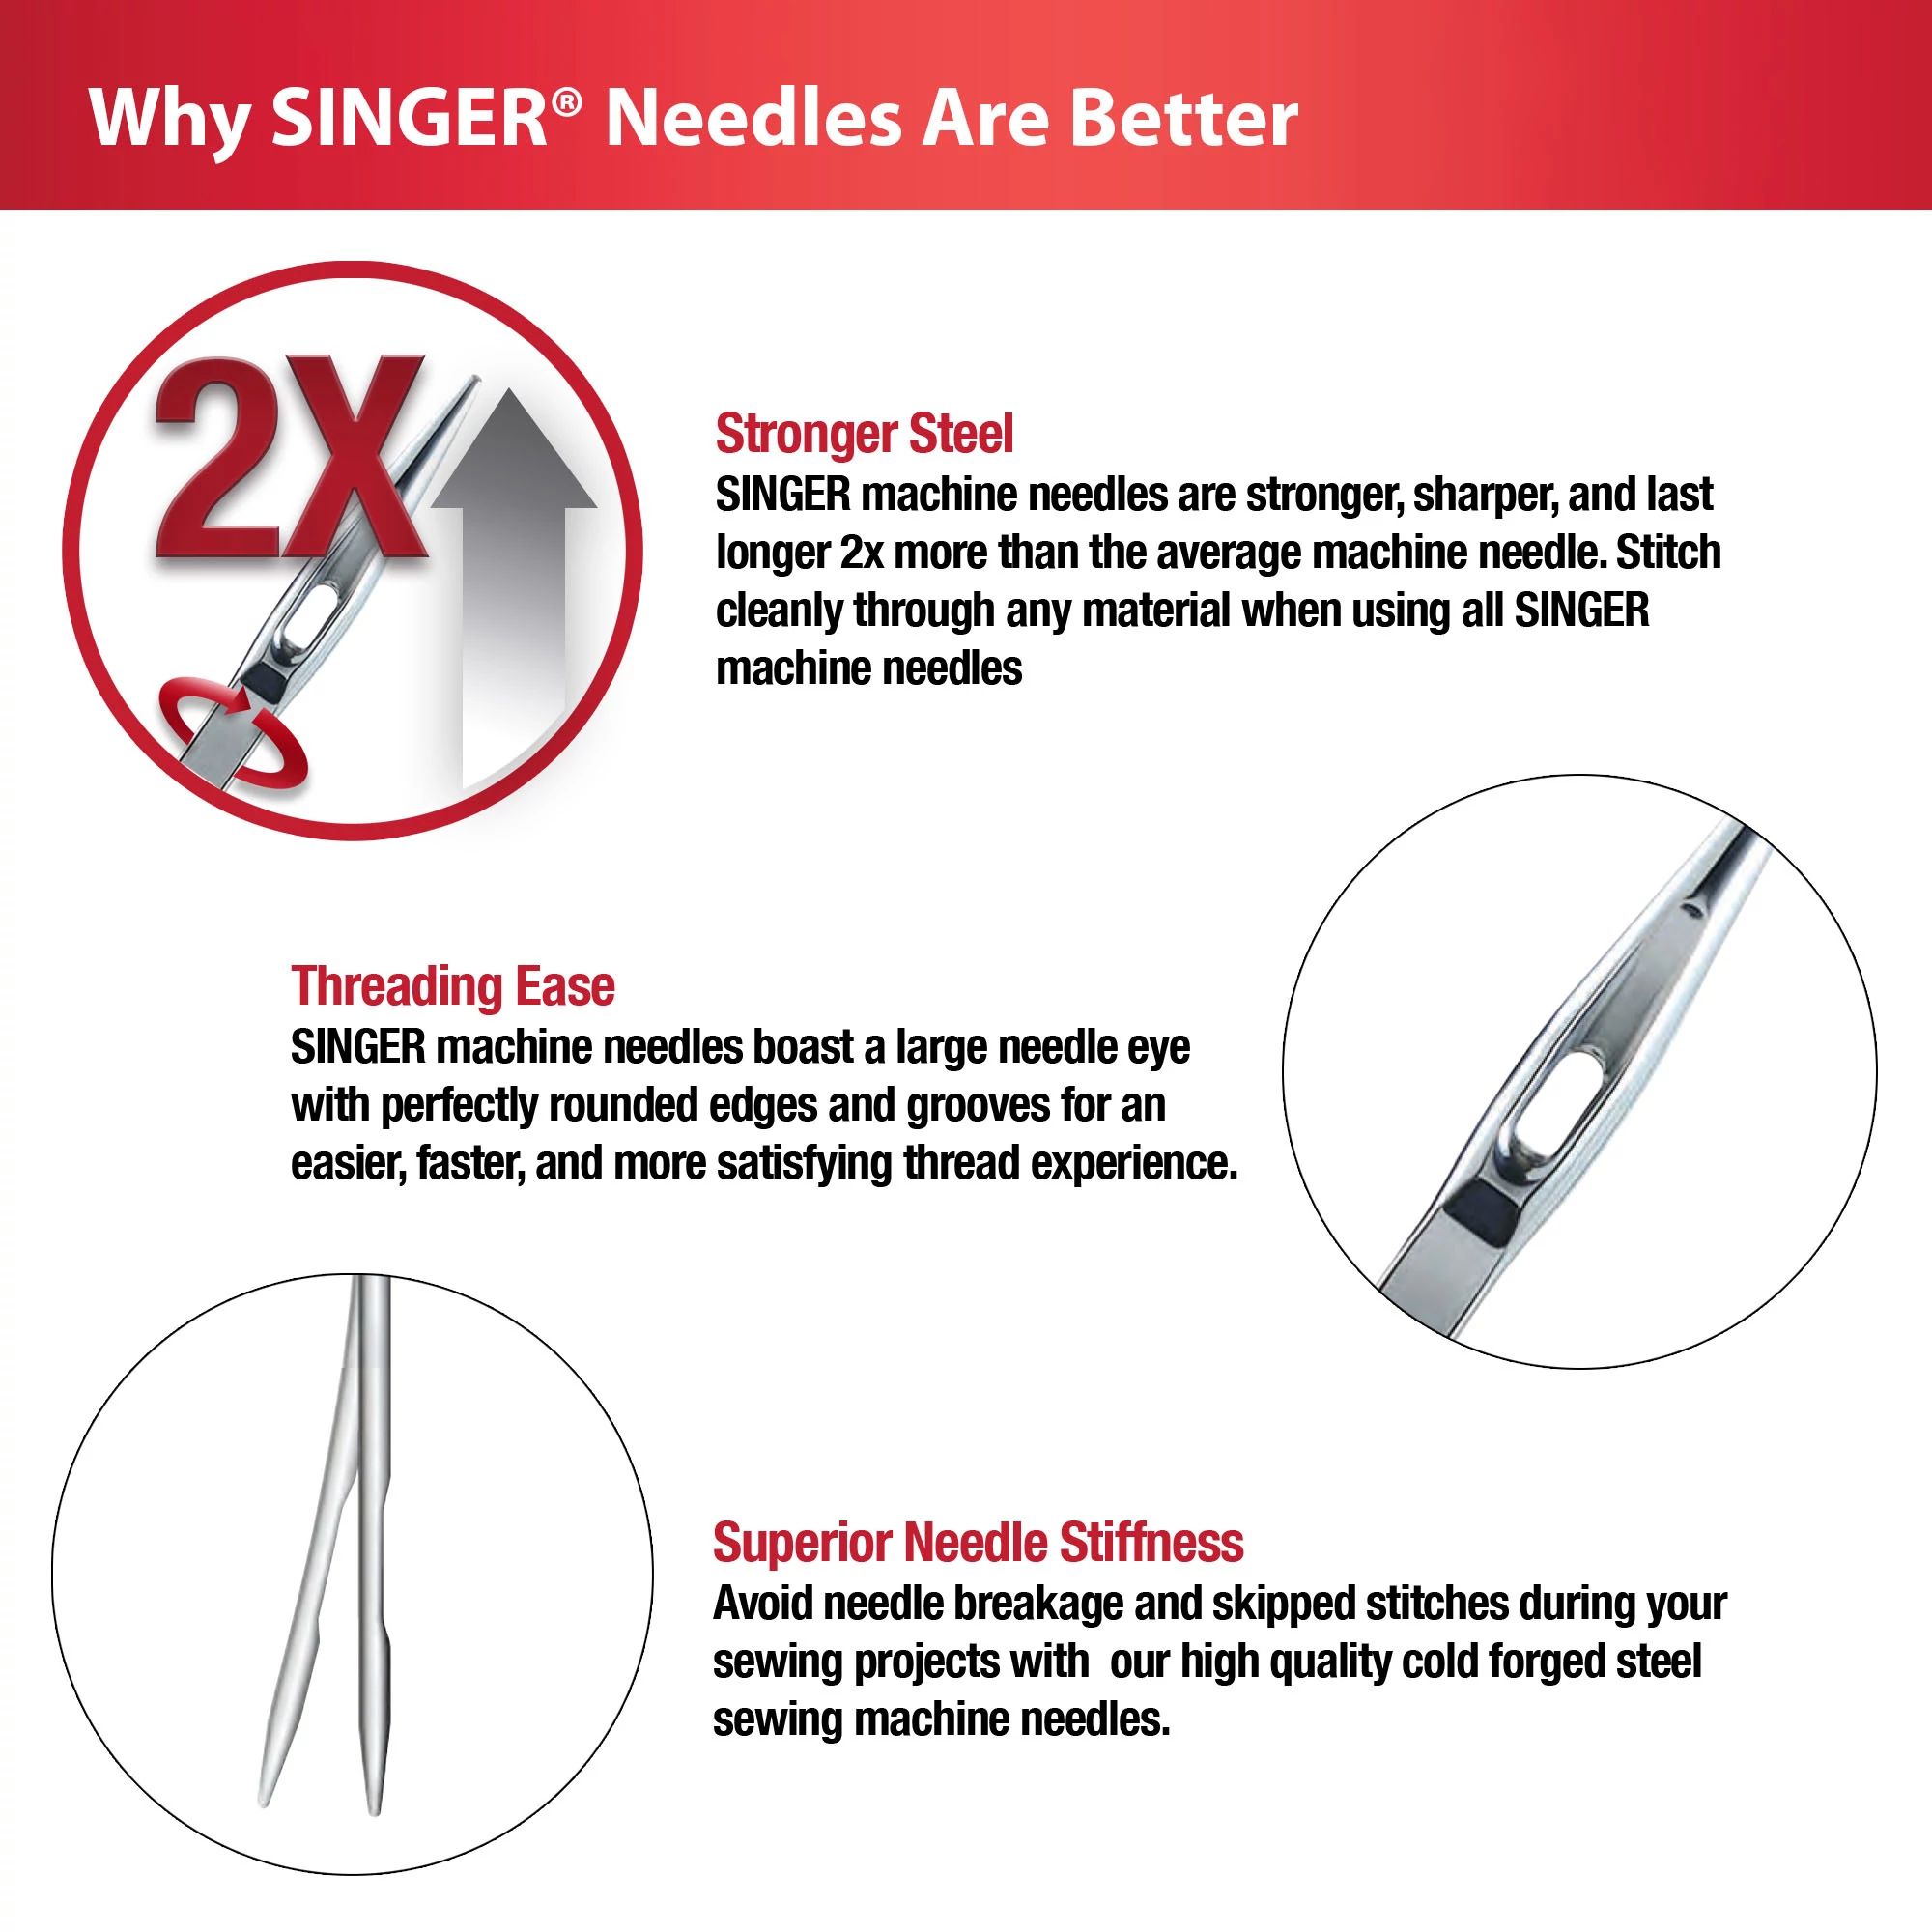 Singer® Assorted Hand Needles, 1 count - Foods Co.